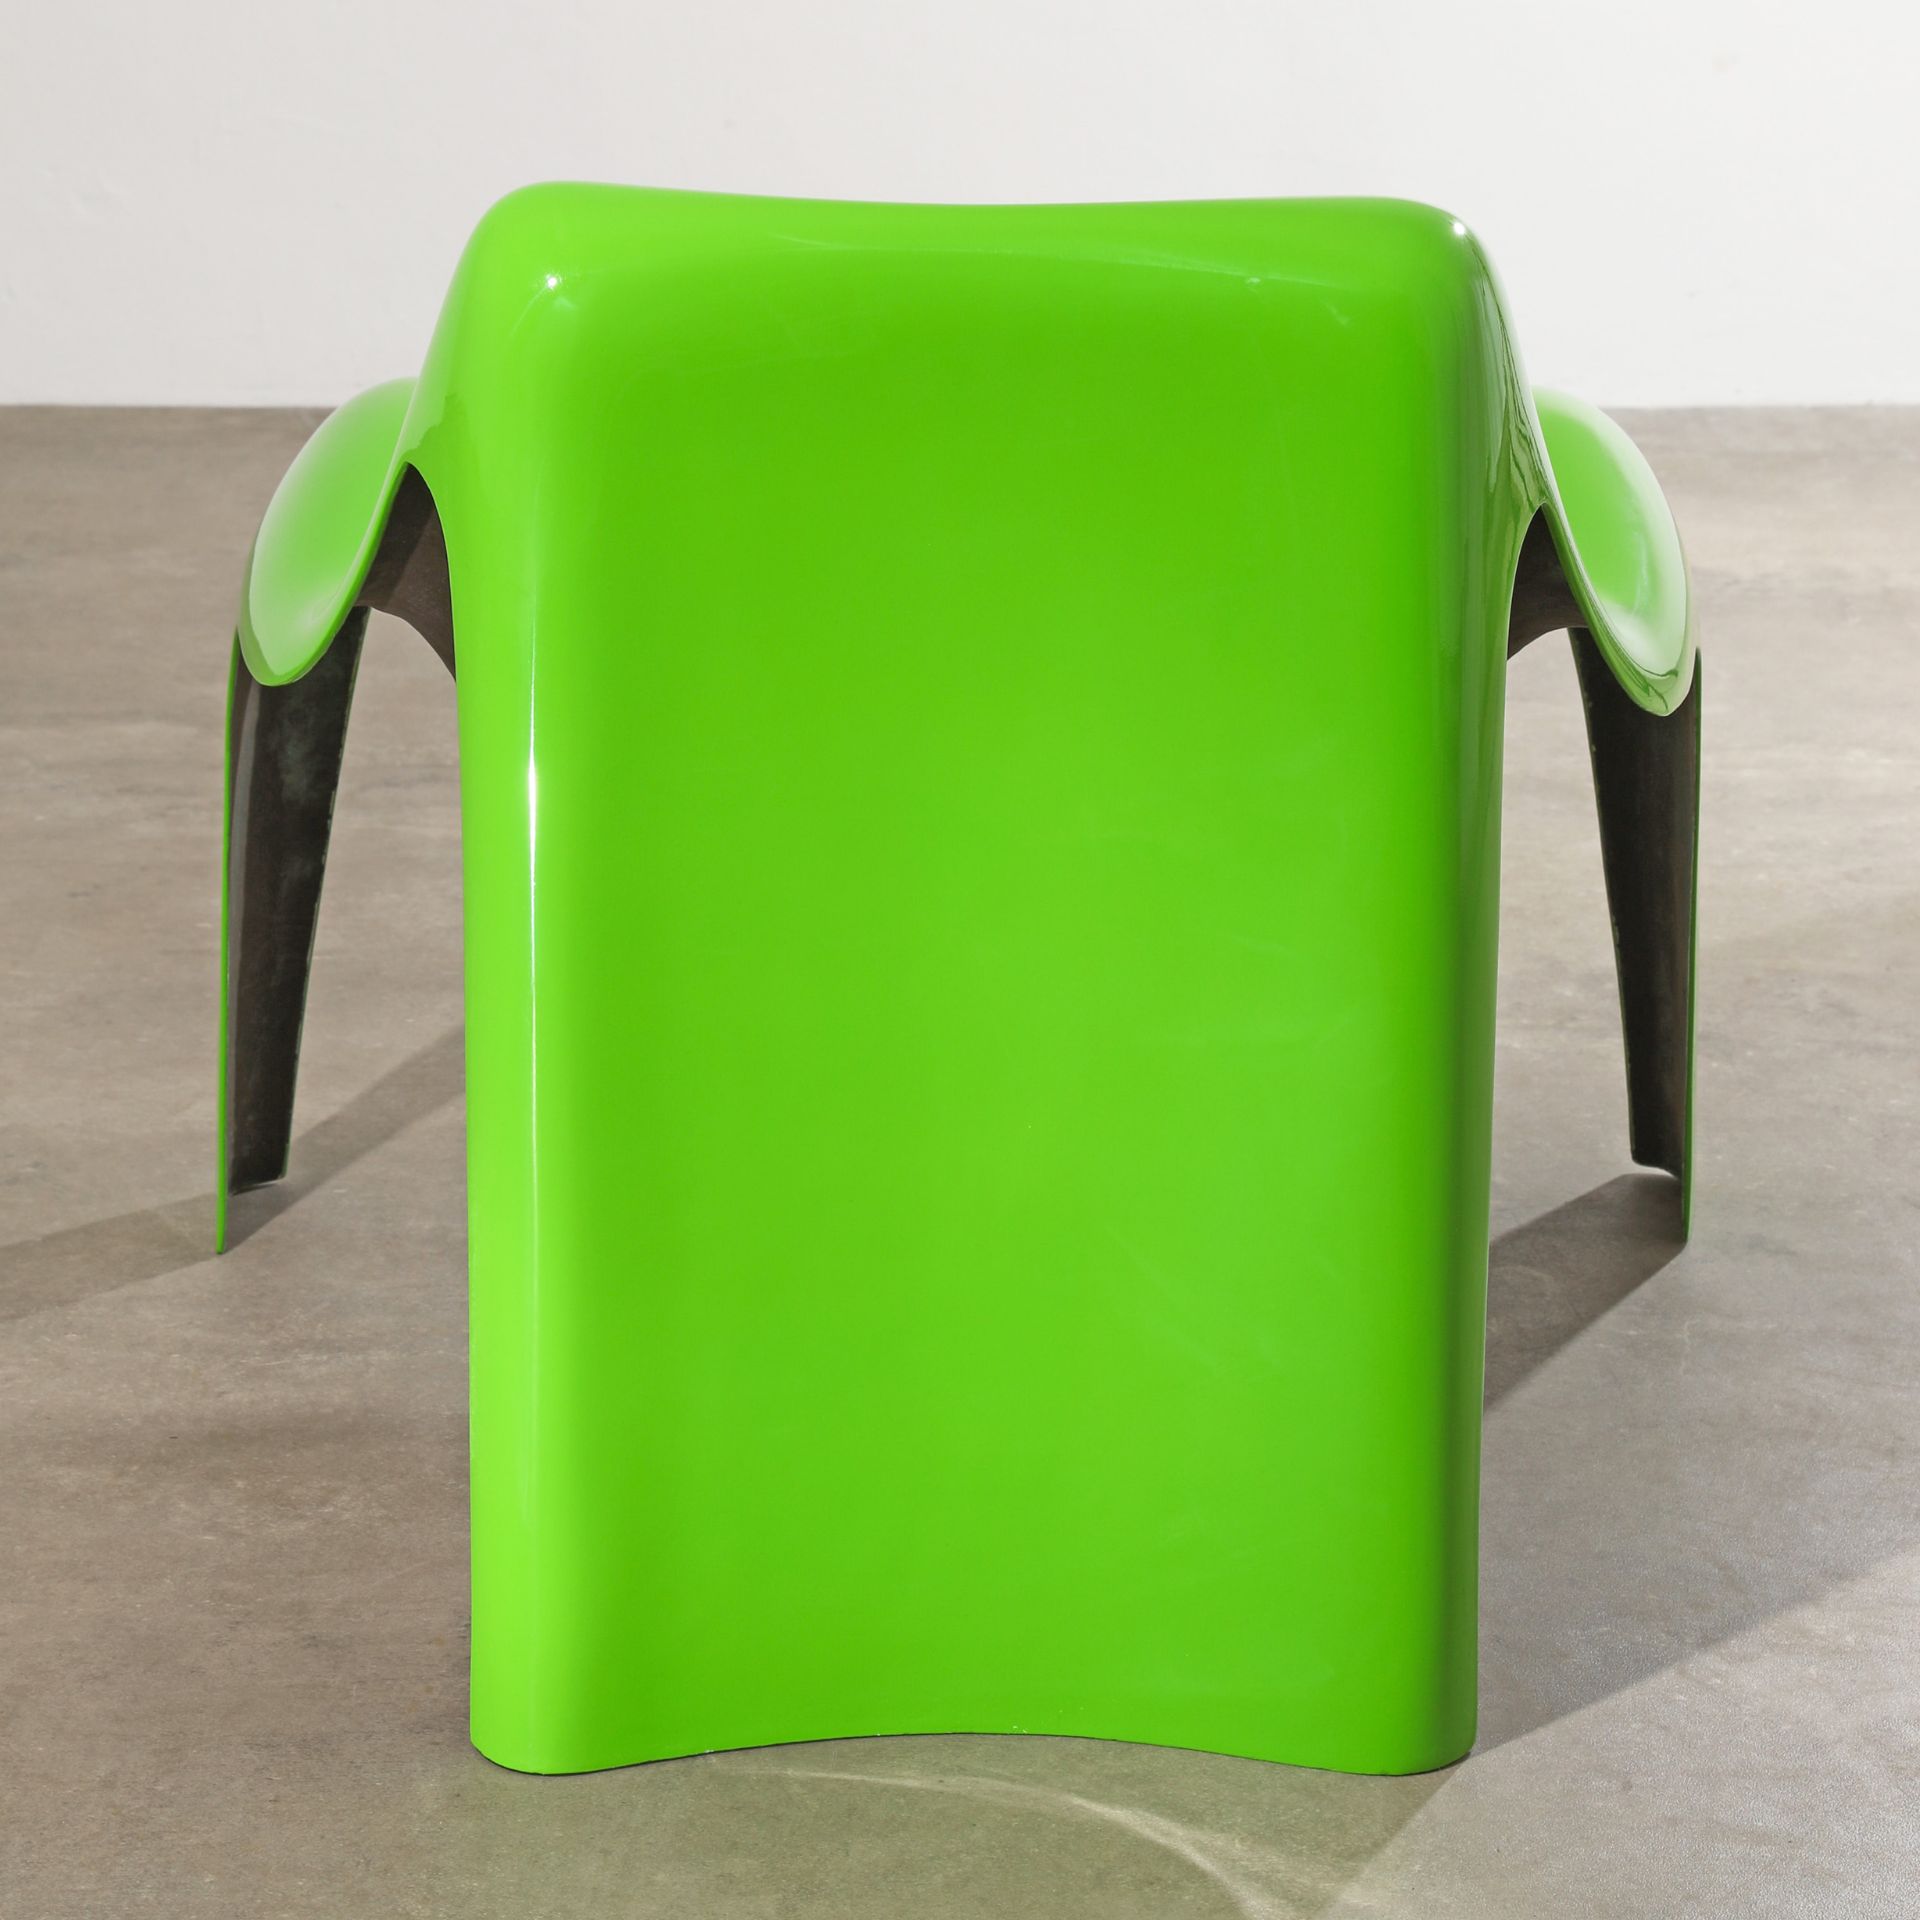 Luigi Colani, seltener Fiberglas Lounge Sessel aus einer Kleinstserie - Bild 4 aus 5